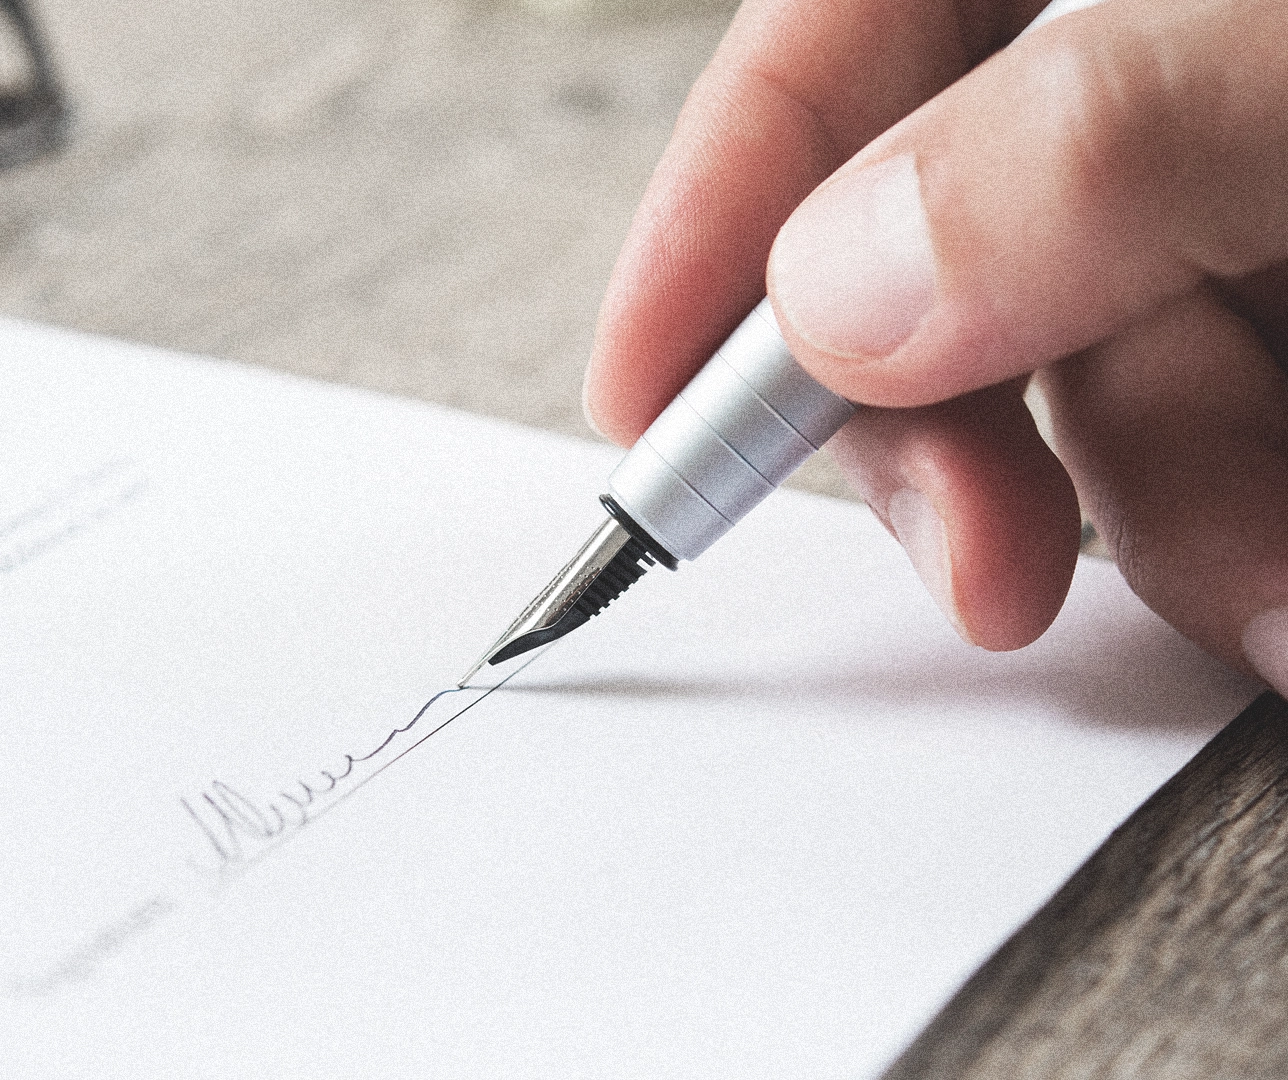 Primer plano de una pluma sujetada por una persona firmando un contrato.